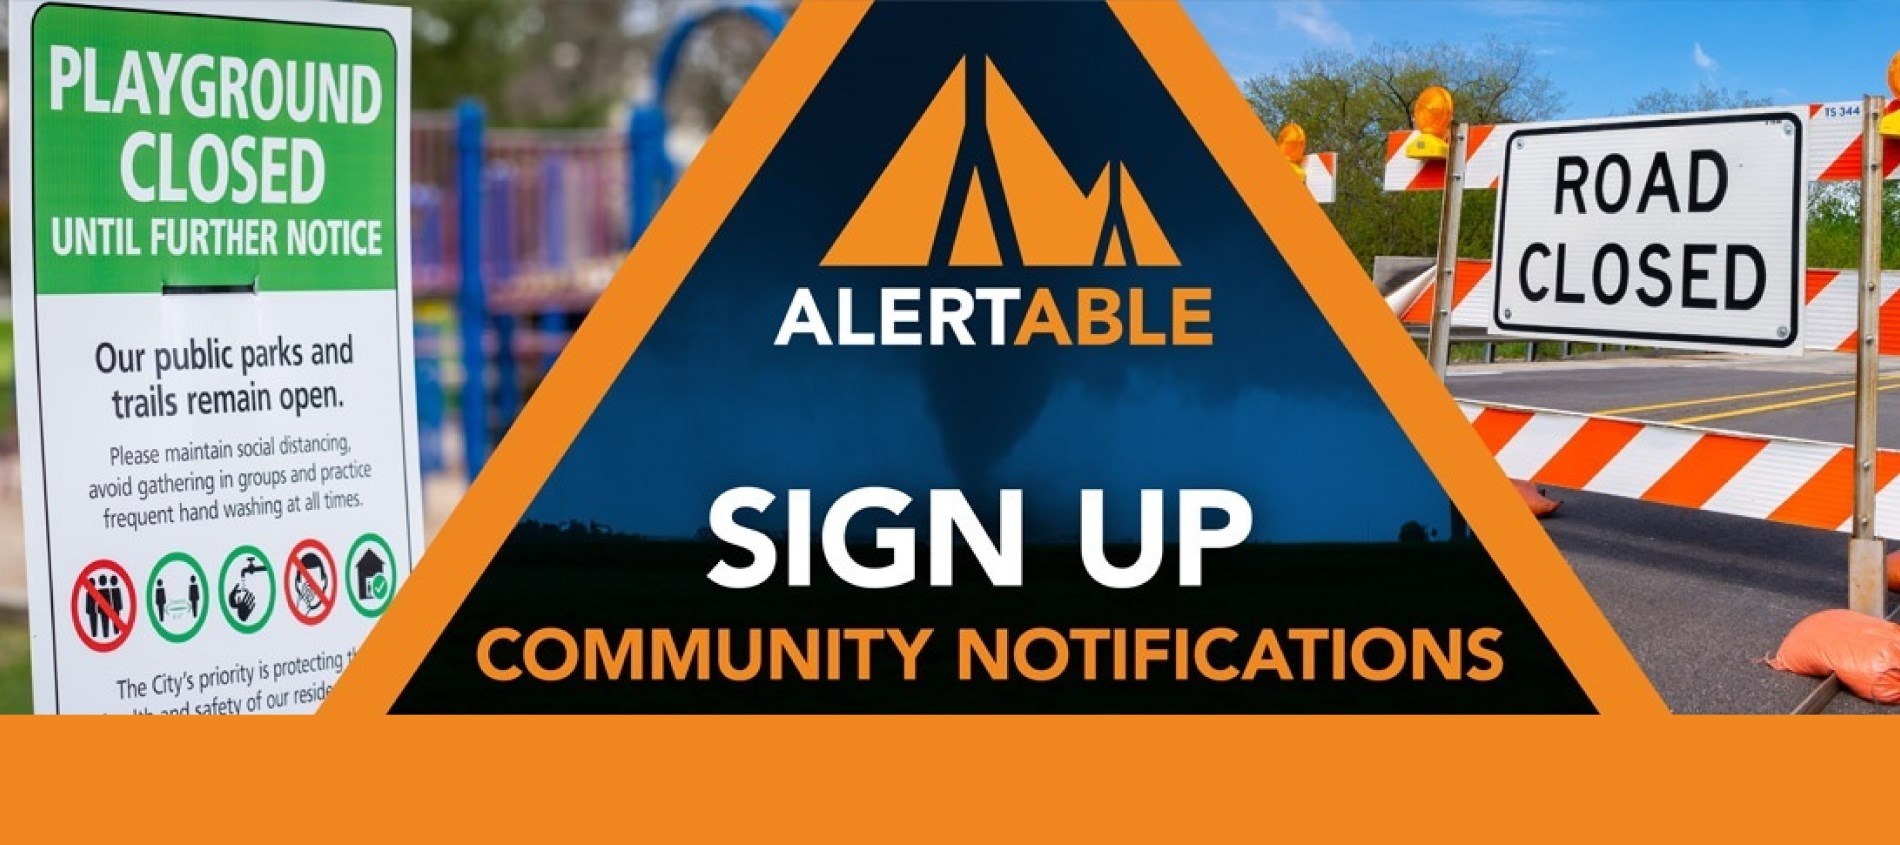 Aletable notification background - Community emergency alert system